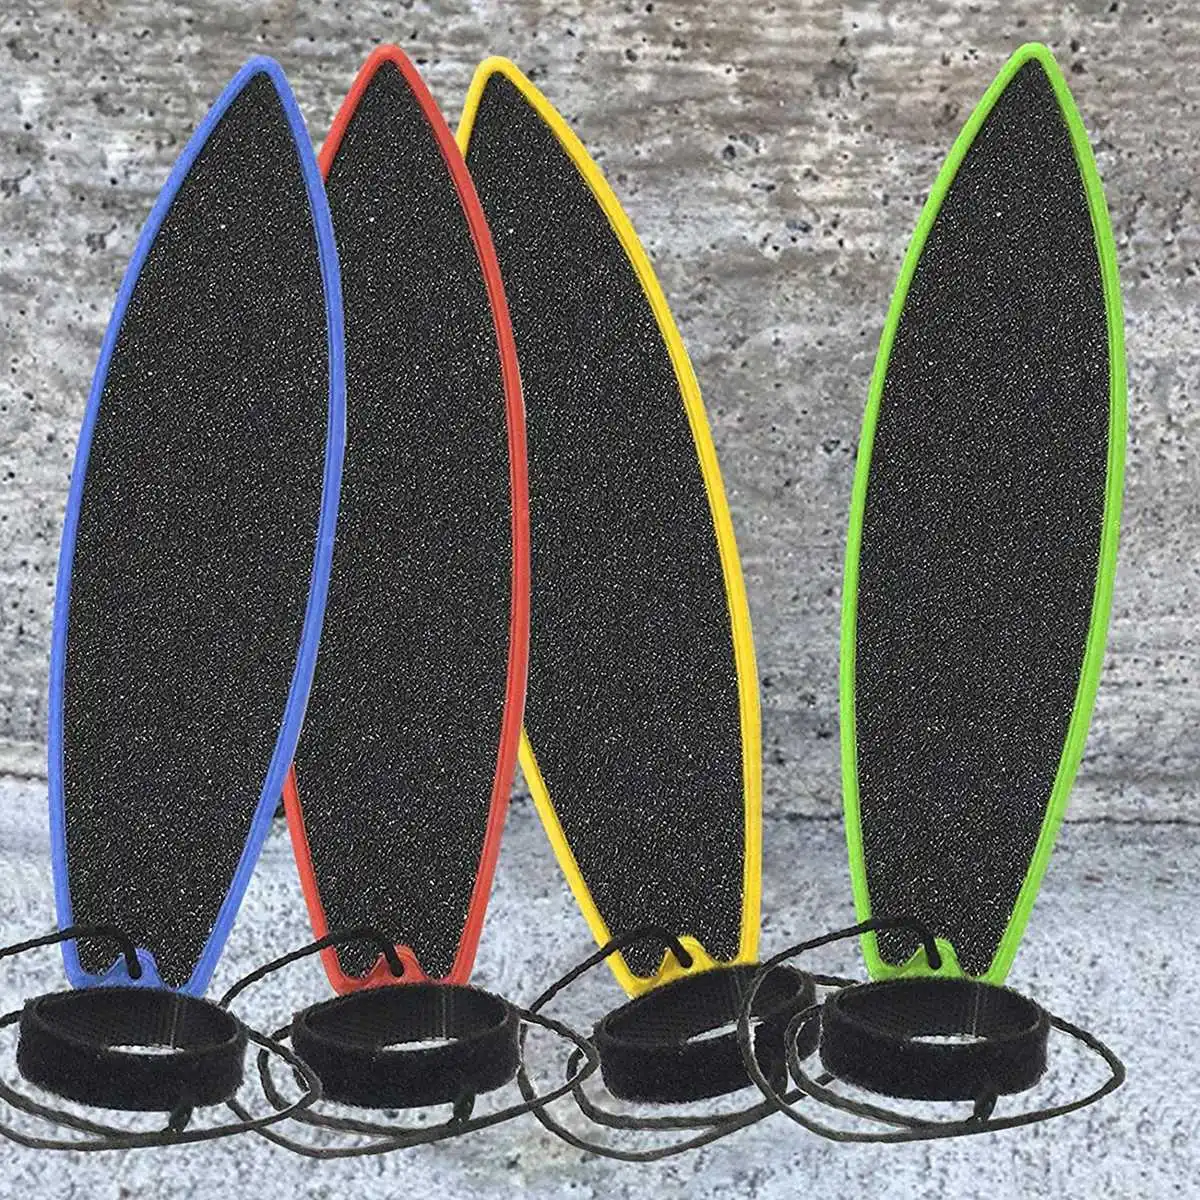 Finger Surfboard,Finger Surf Boards,Fingertip Surfboard for Adults Teens Boys Girls to Hone Their Surfer Skills,Blue